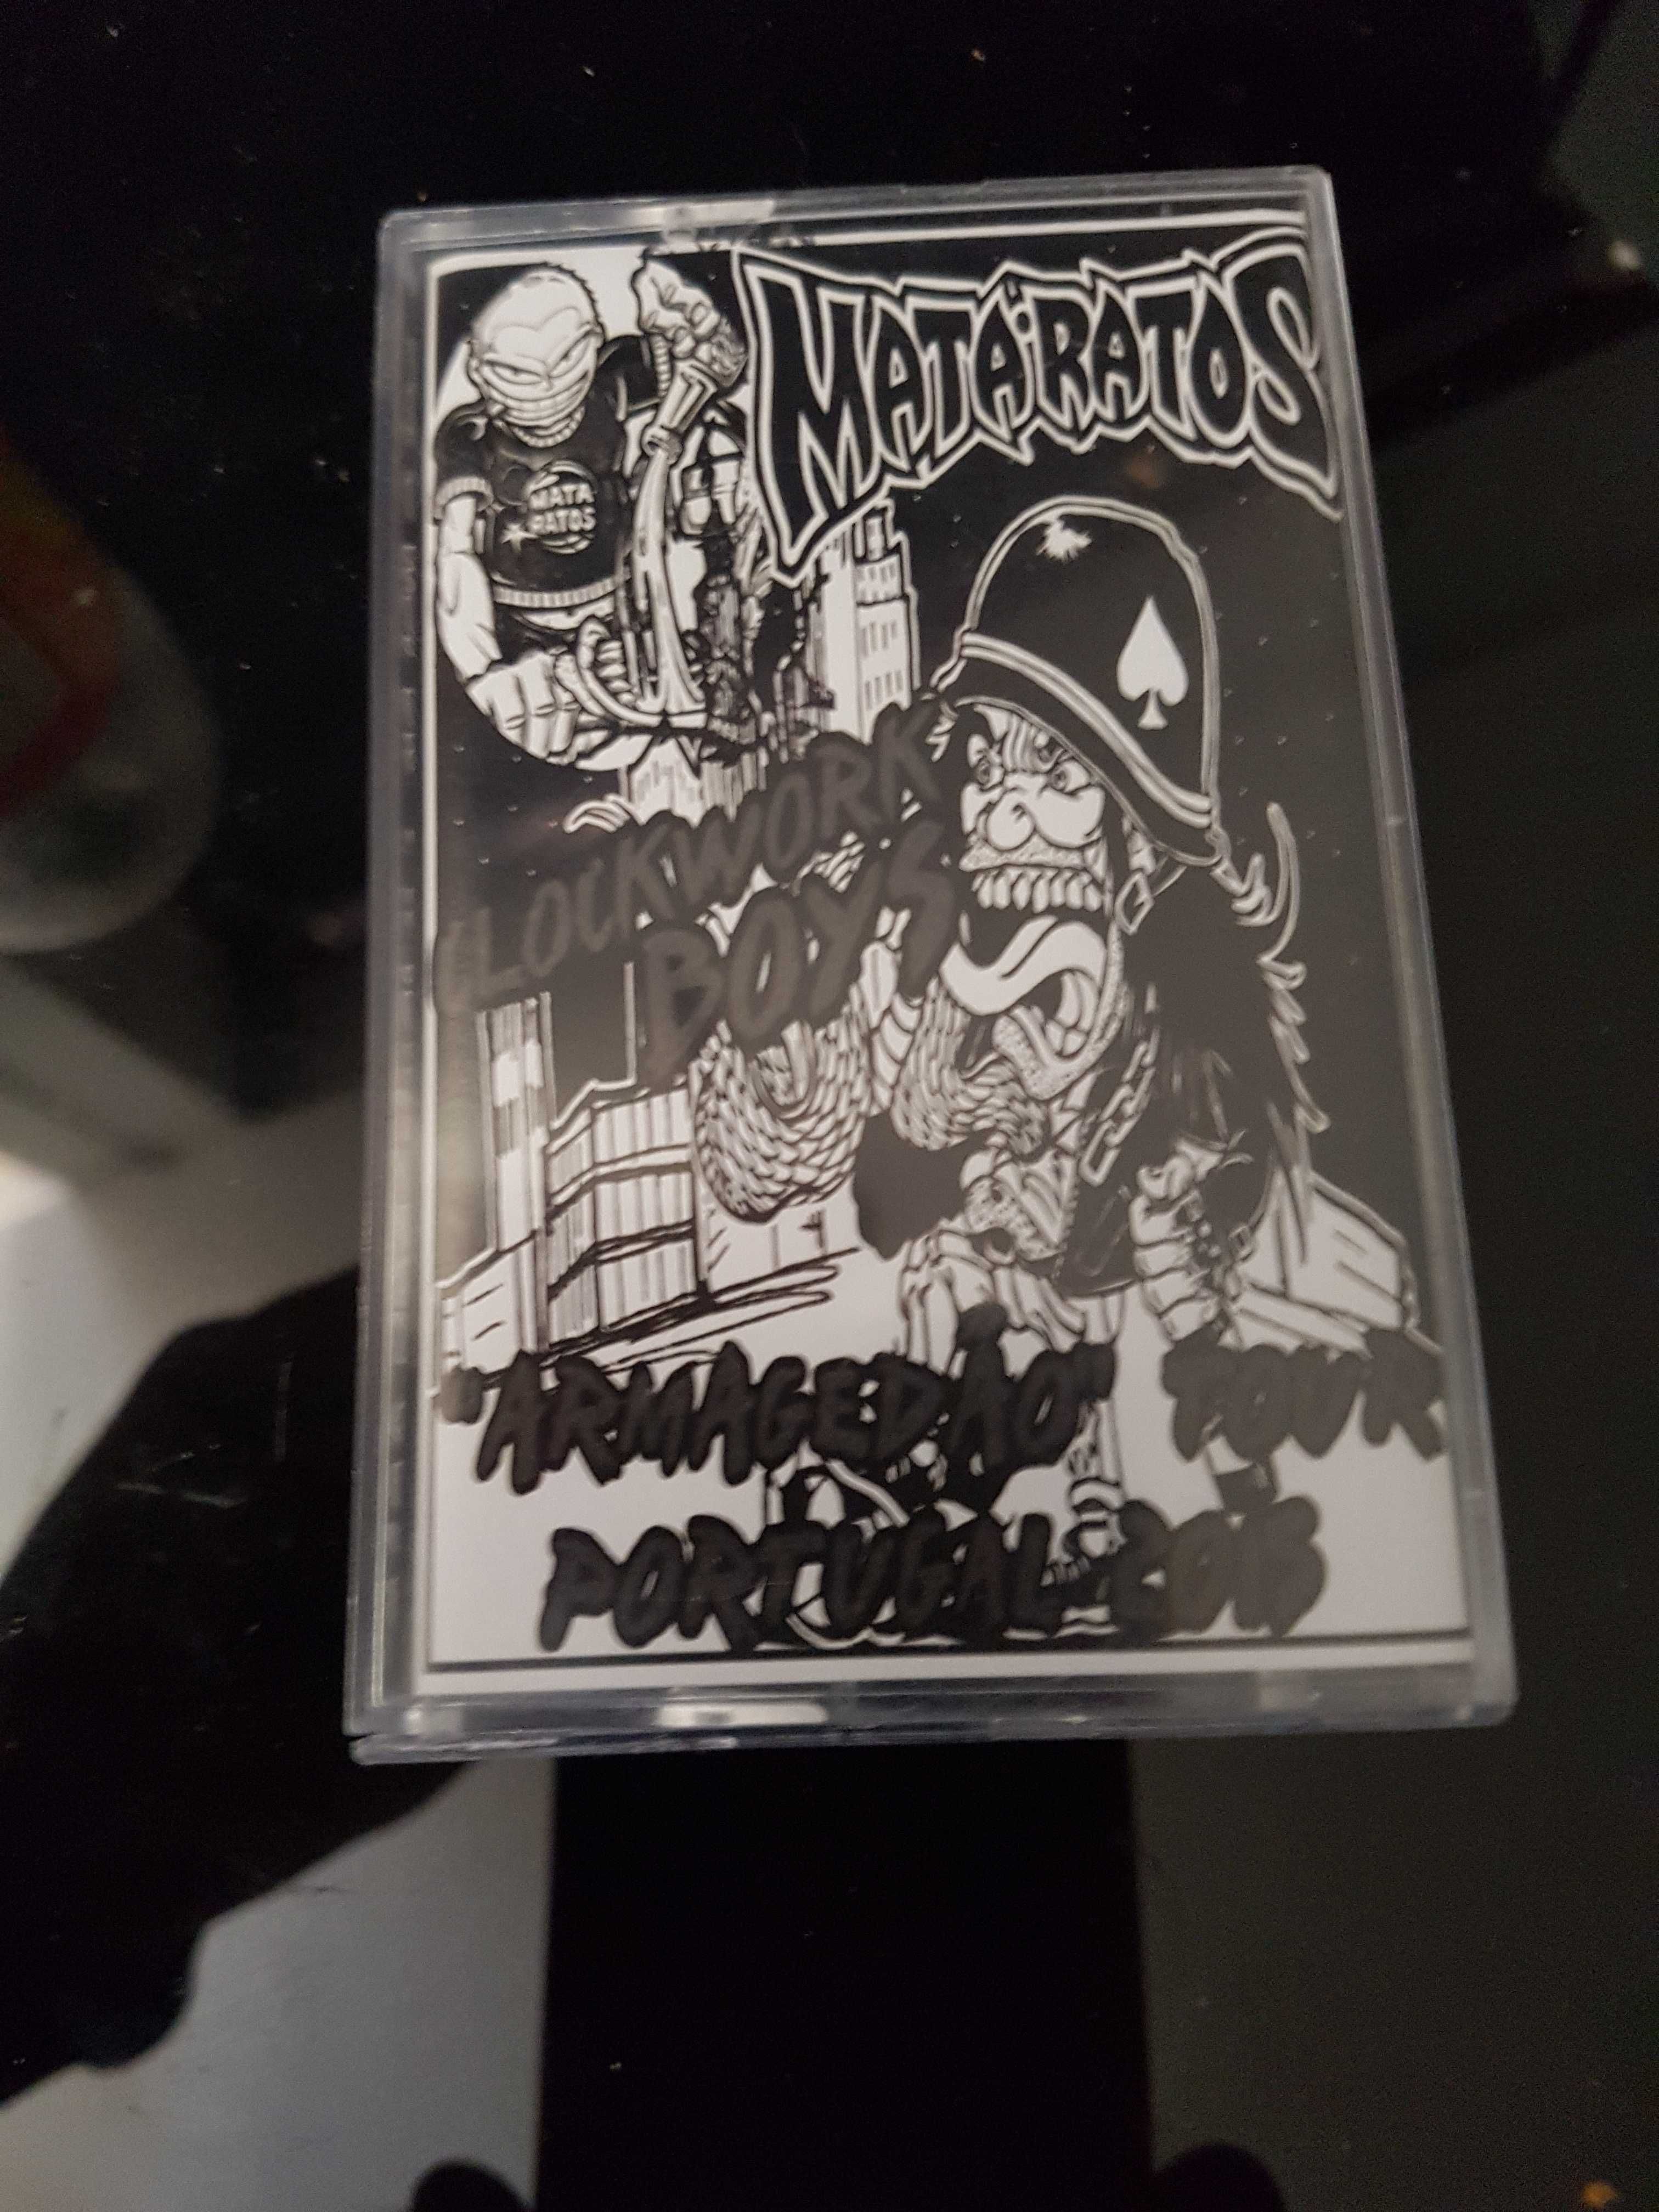 Mata Ratos / Clockwork boys - Split Tape